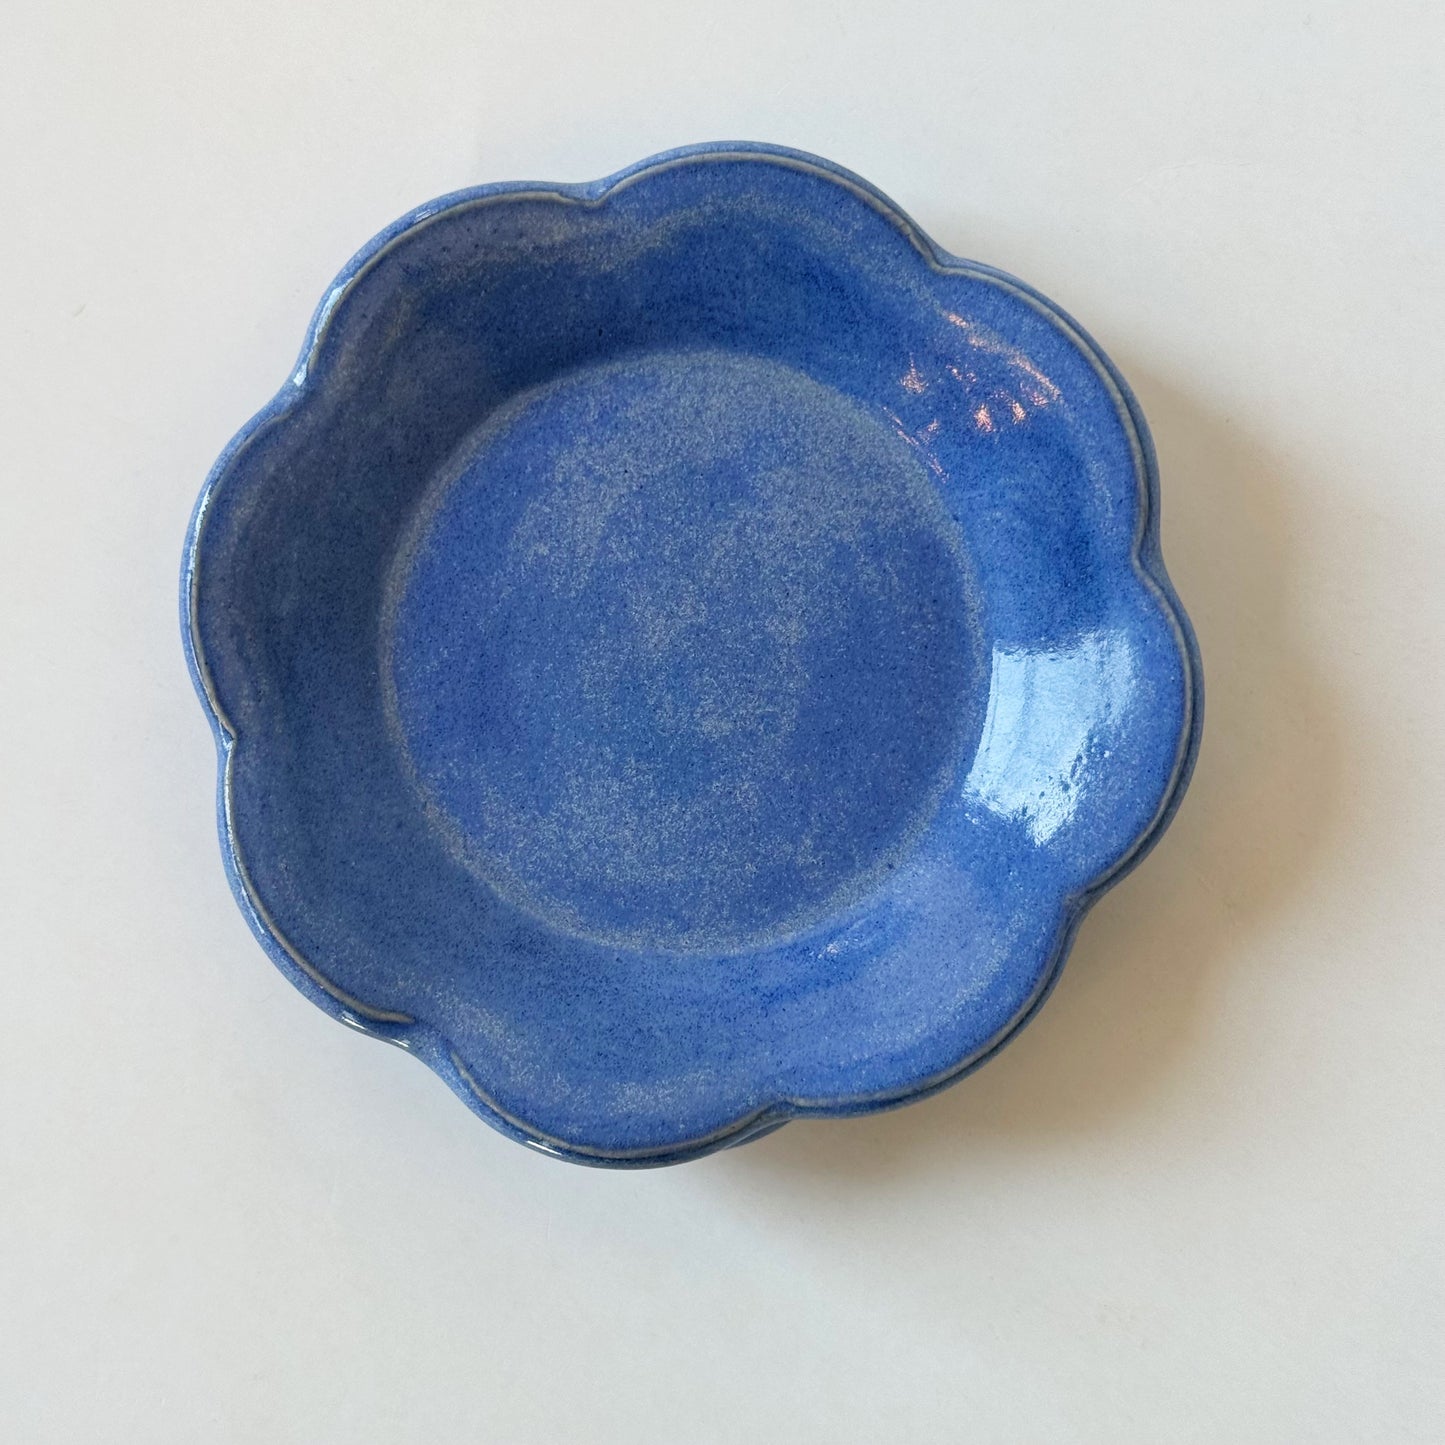 Flower Shaped Plate | Madeleine Schmidt